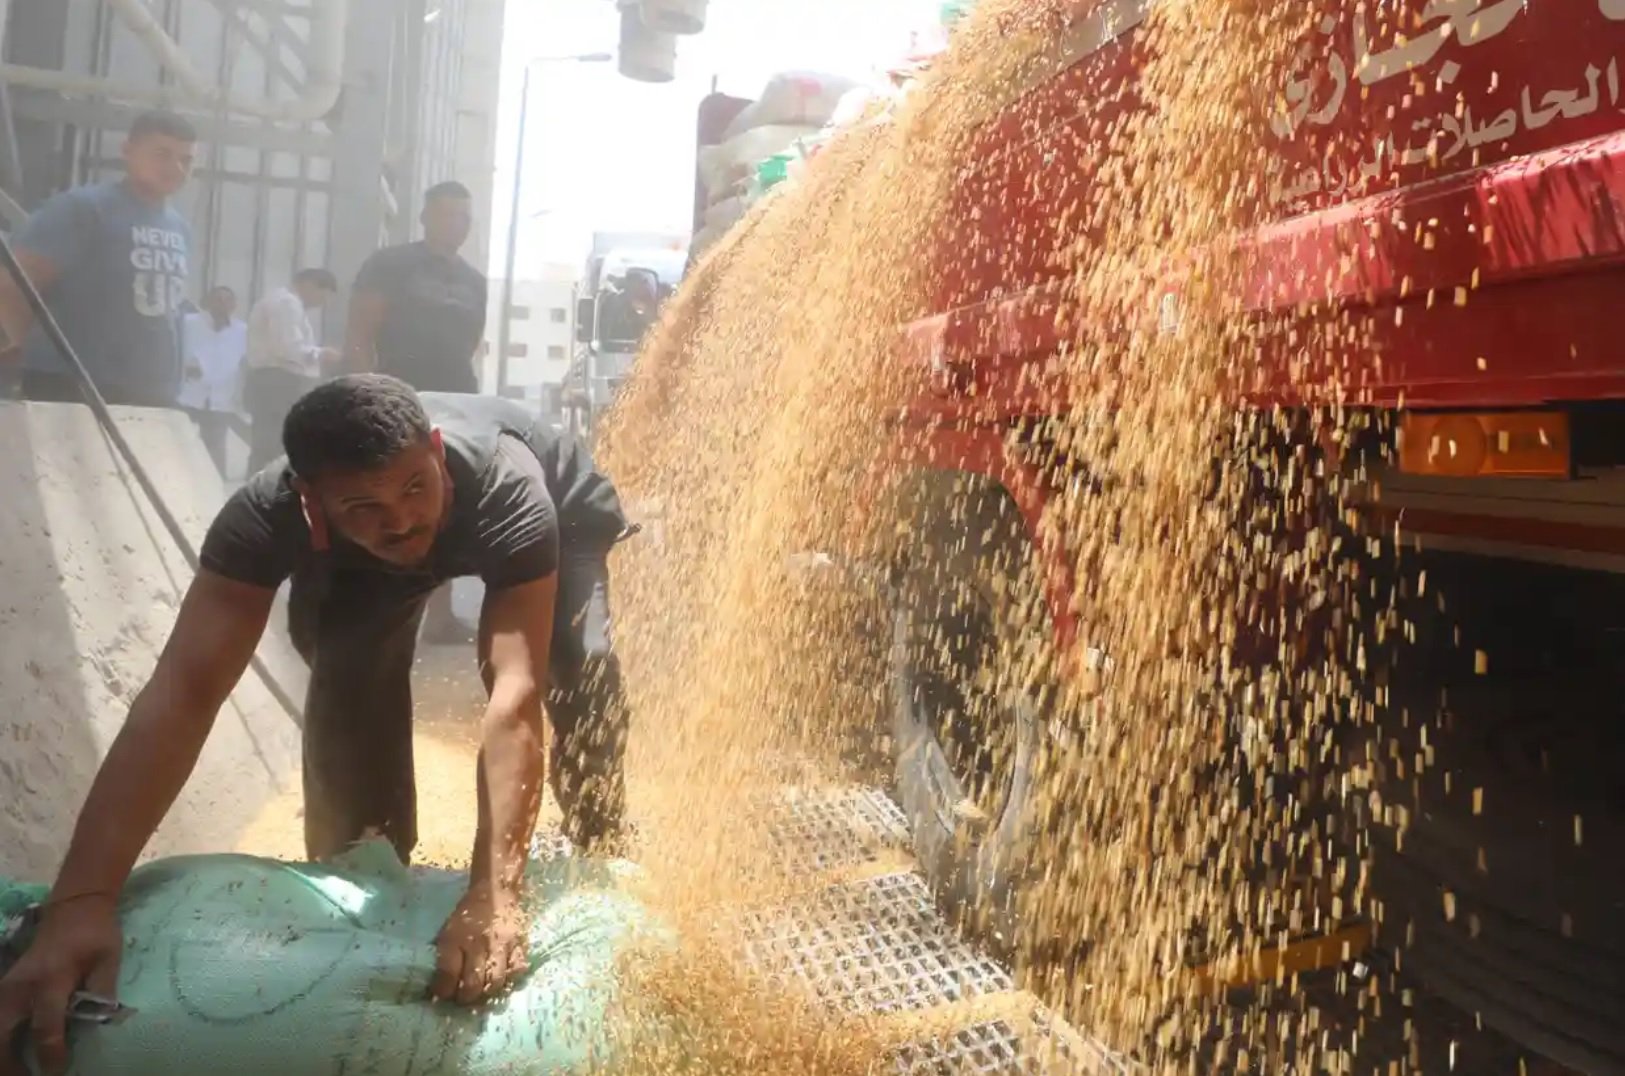 Як вивезти з України 20 млн тонн зерна? - Guardian